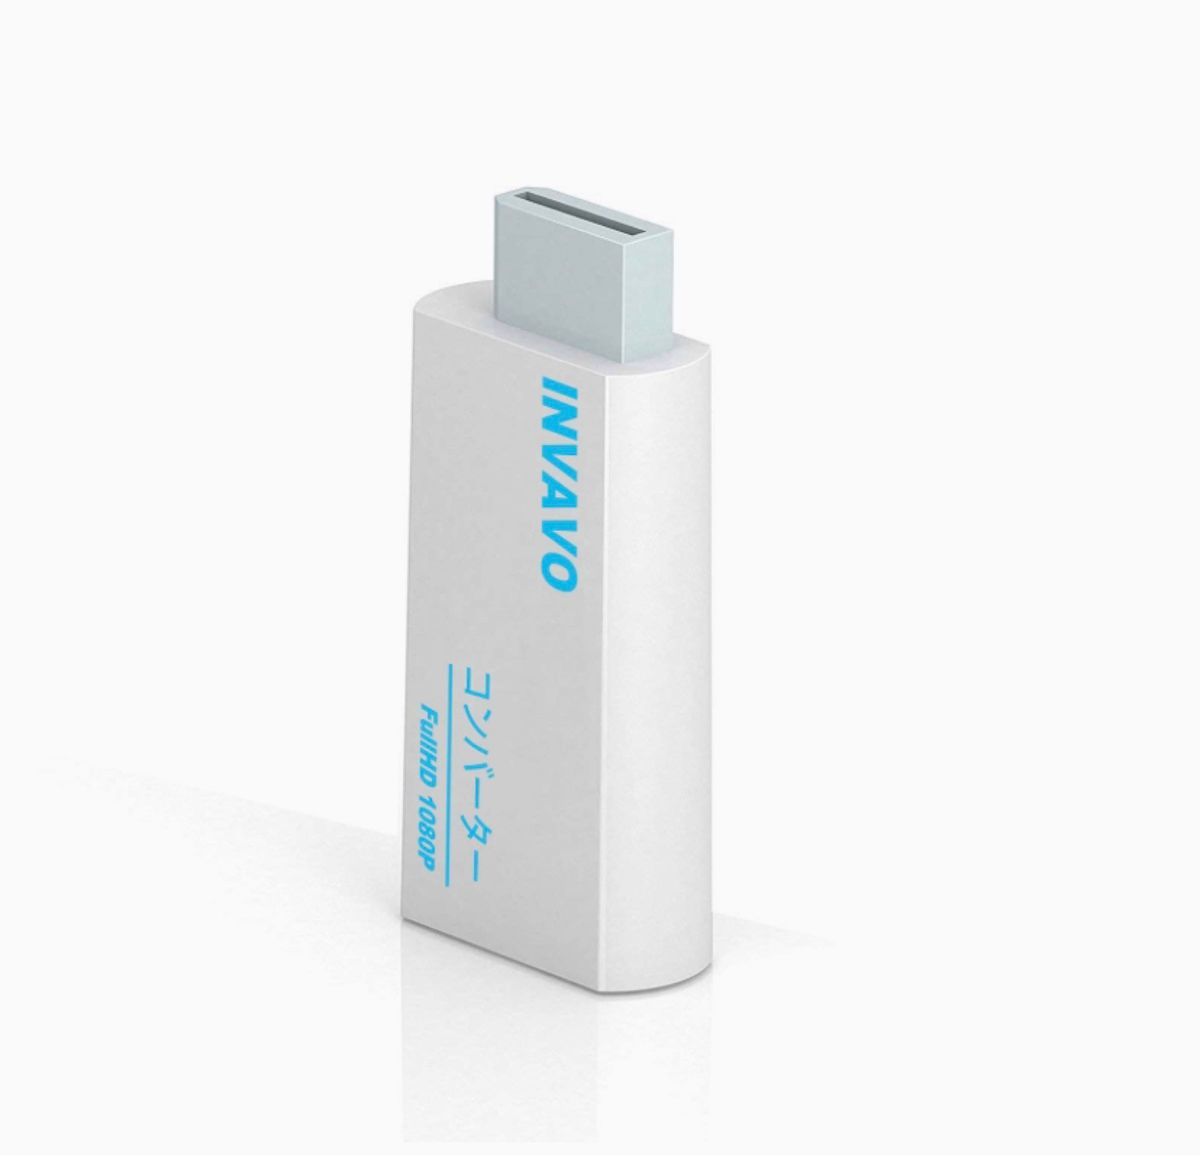 HDMIコンバーター 変換アダプター 接続コネクター Wii to HDMI 変換アダプターHDMI出力 携帯便利 (1.5M_画像5